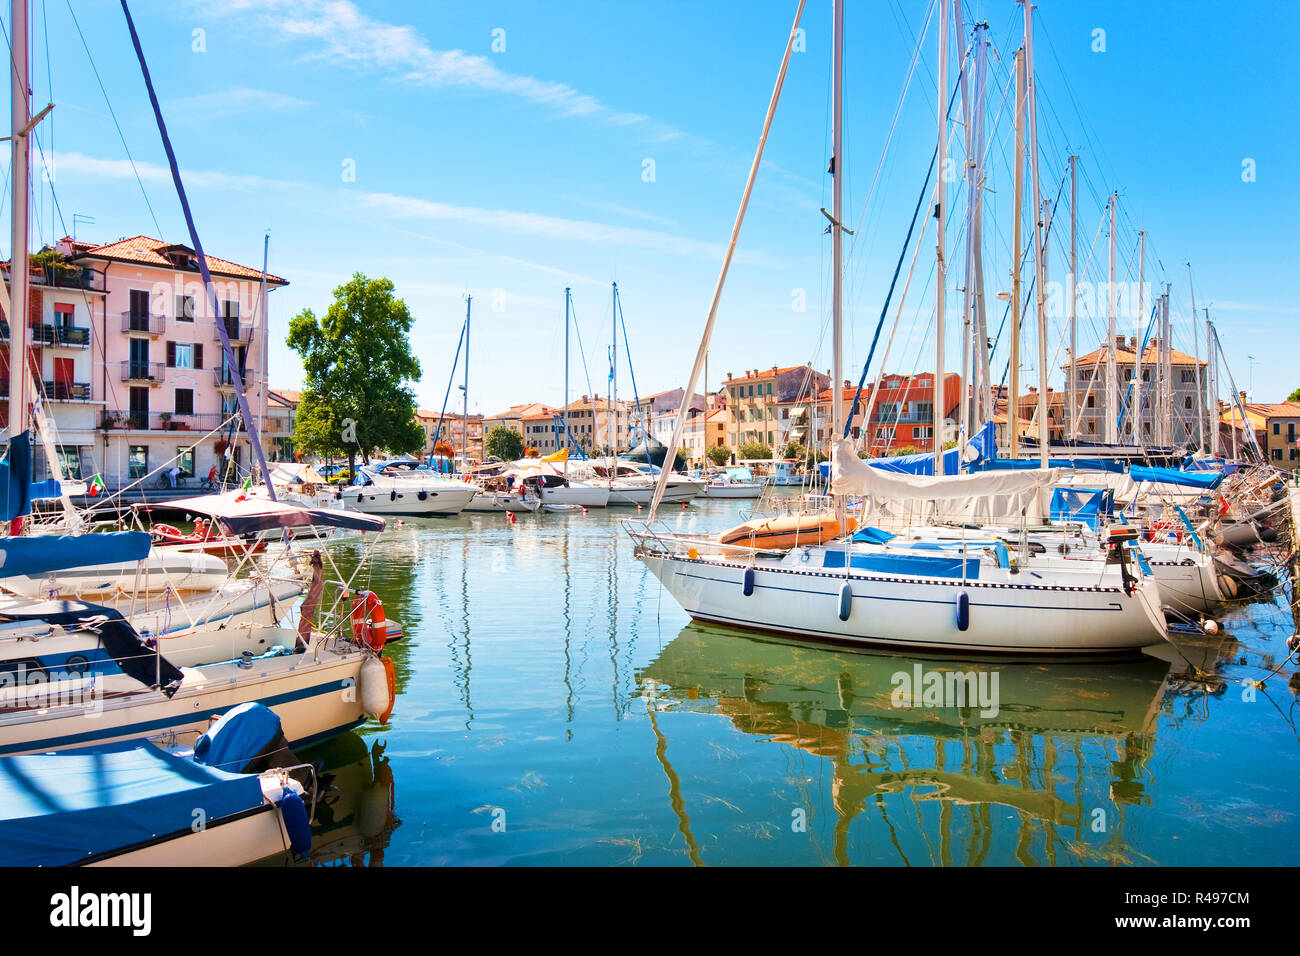 Beautiful scene of boats lying in the harbor of Grado, Friuli-Venezia Giulia, Italy at Adriatic Sea Stock Photo